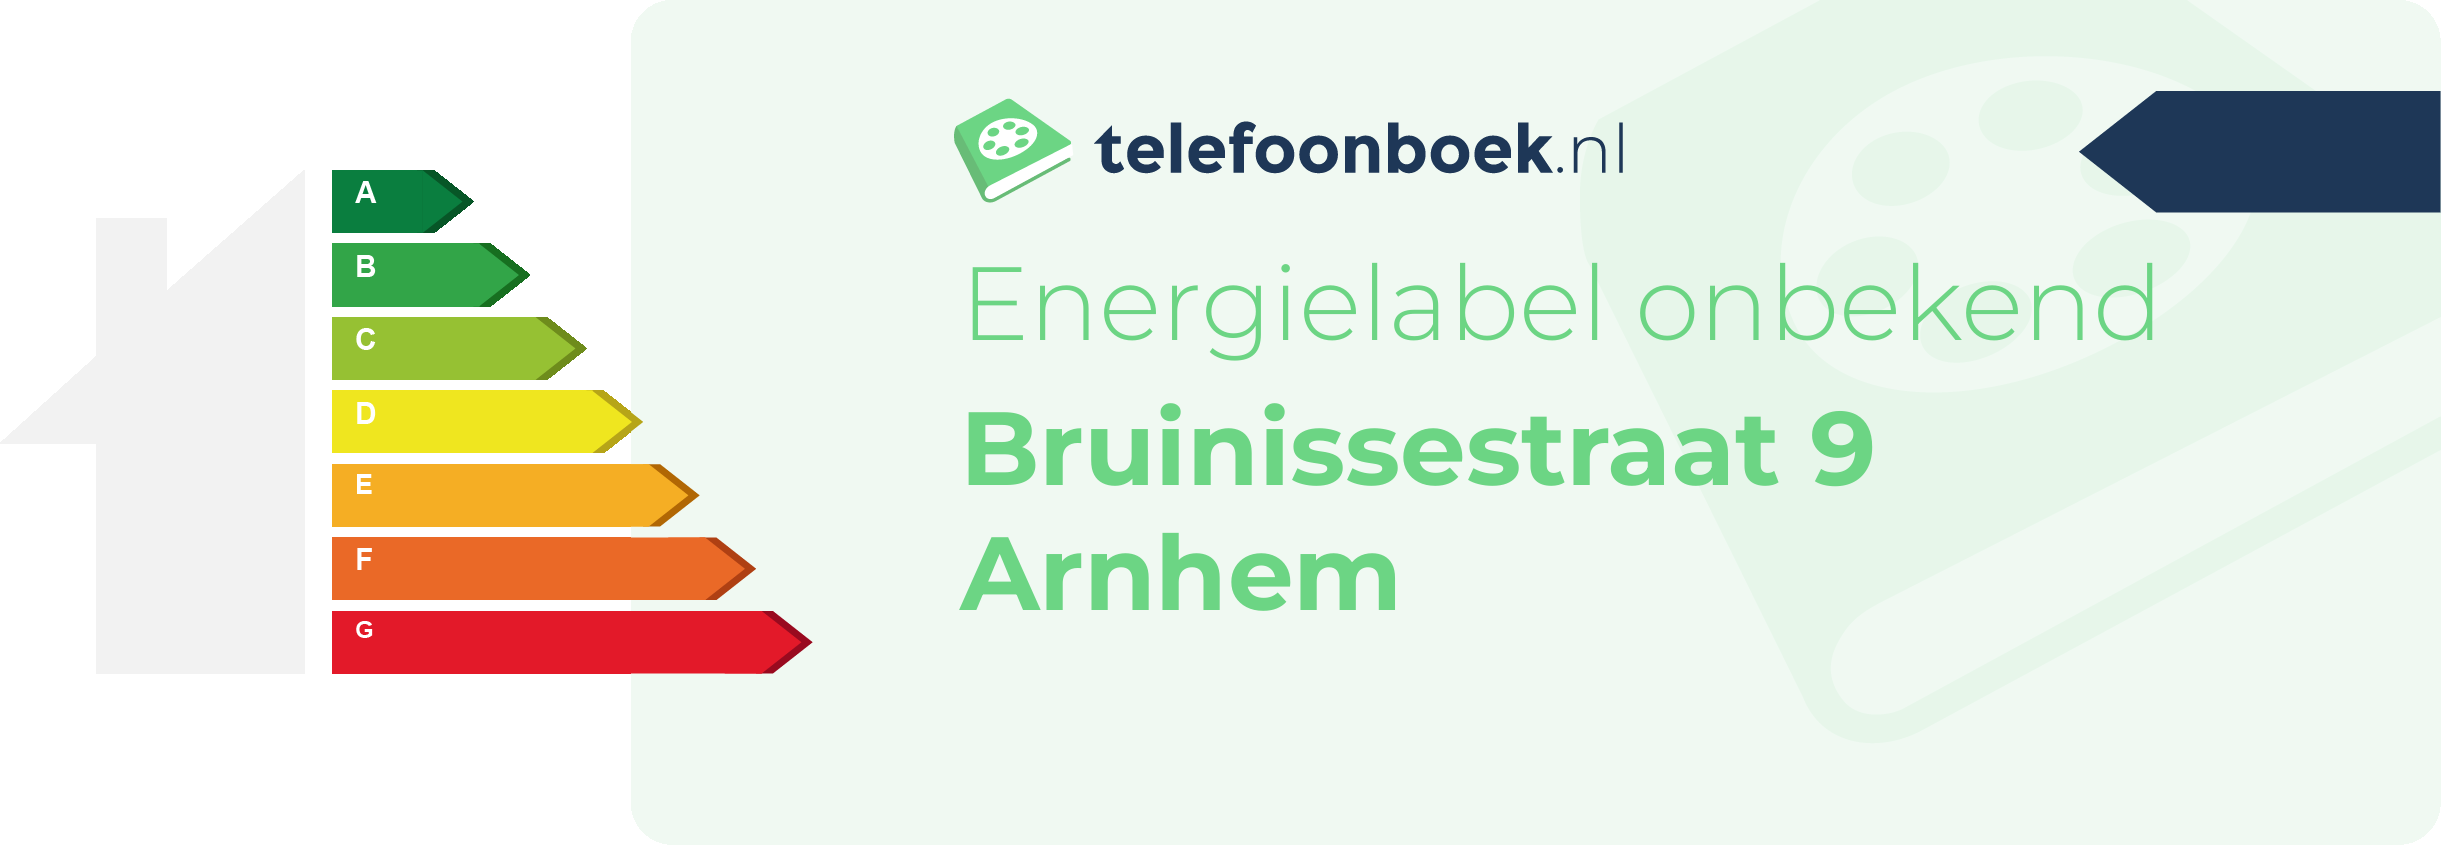 Energielabel Bruinissestraat 9 Arnhem